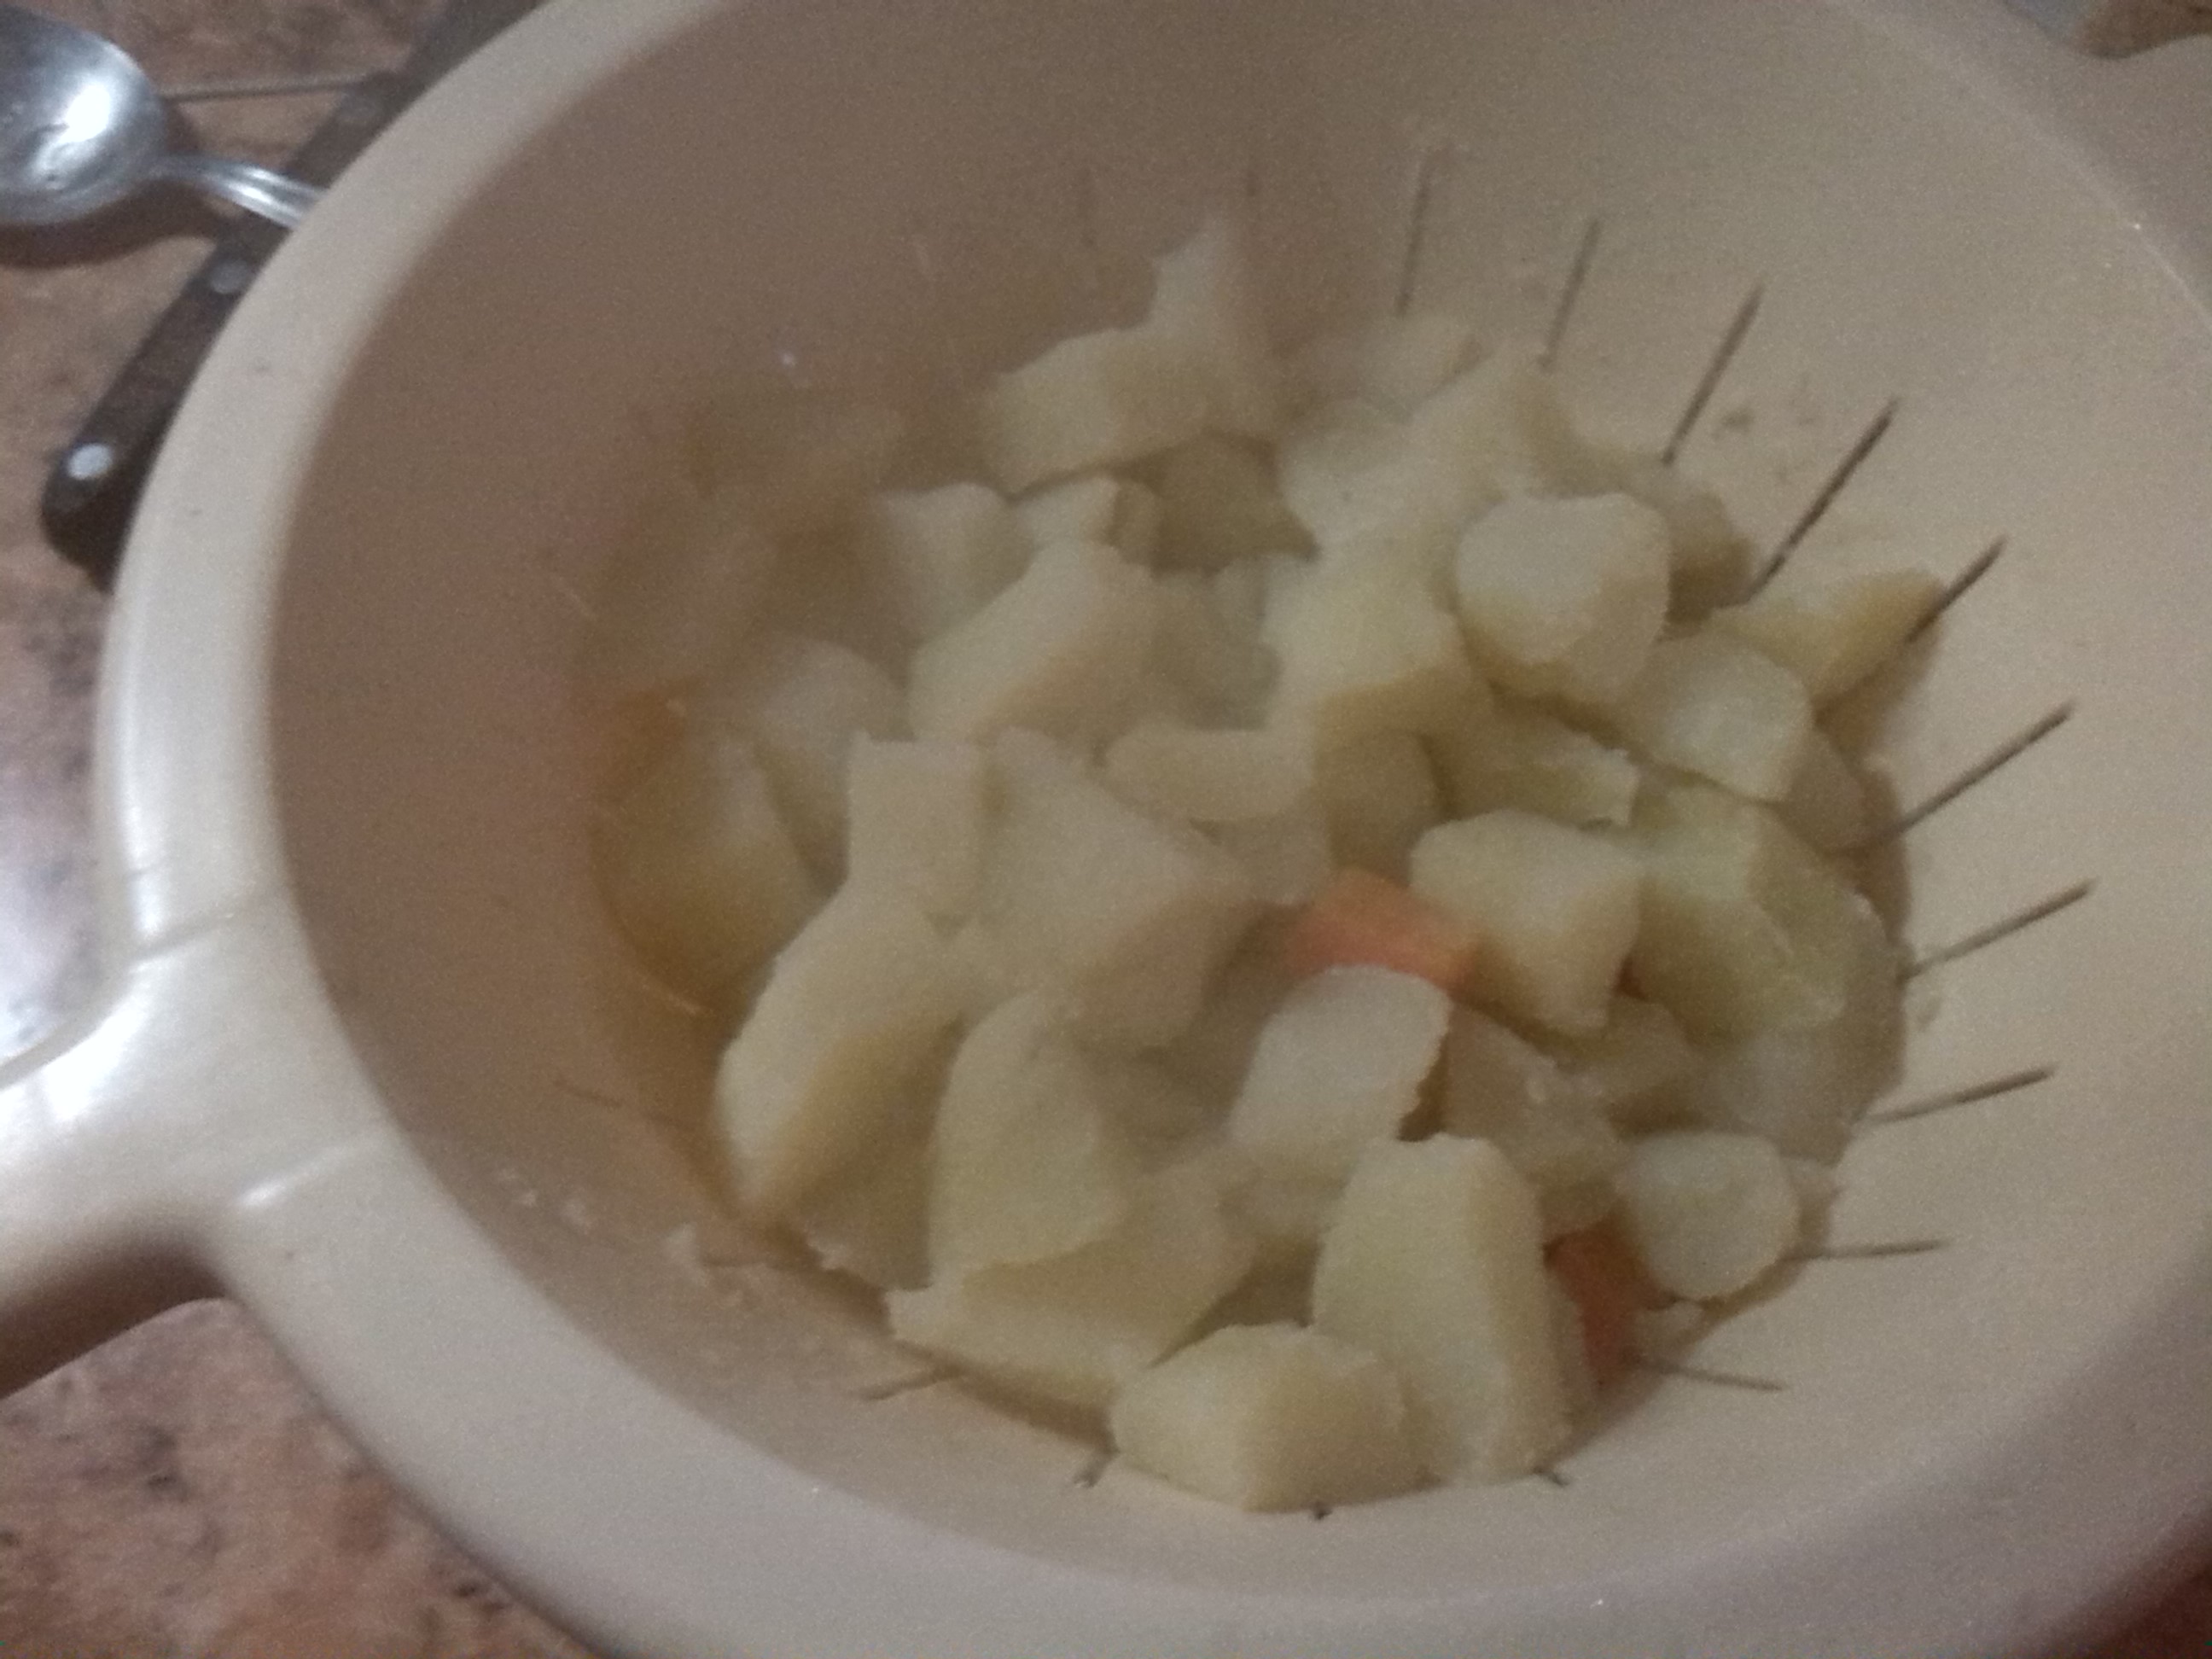 Salata de cartofi cu pastrama de macrou afumat